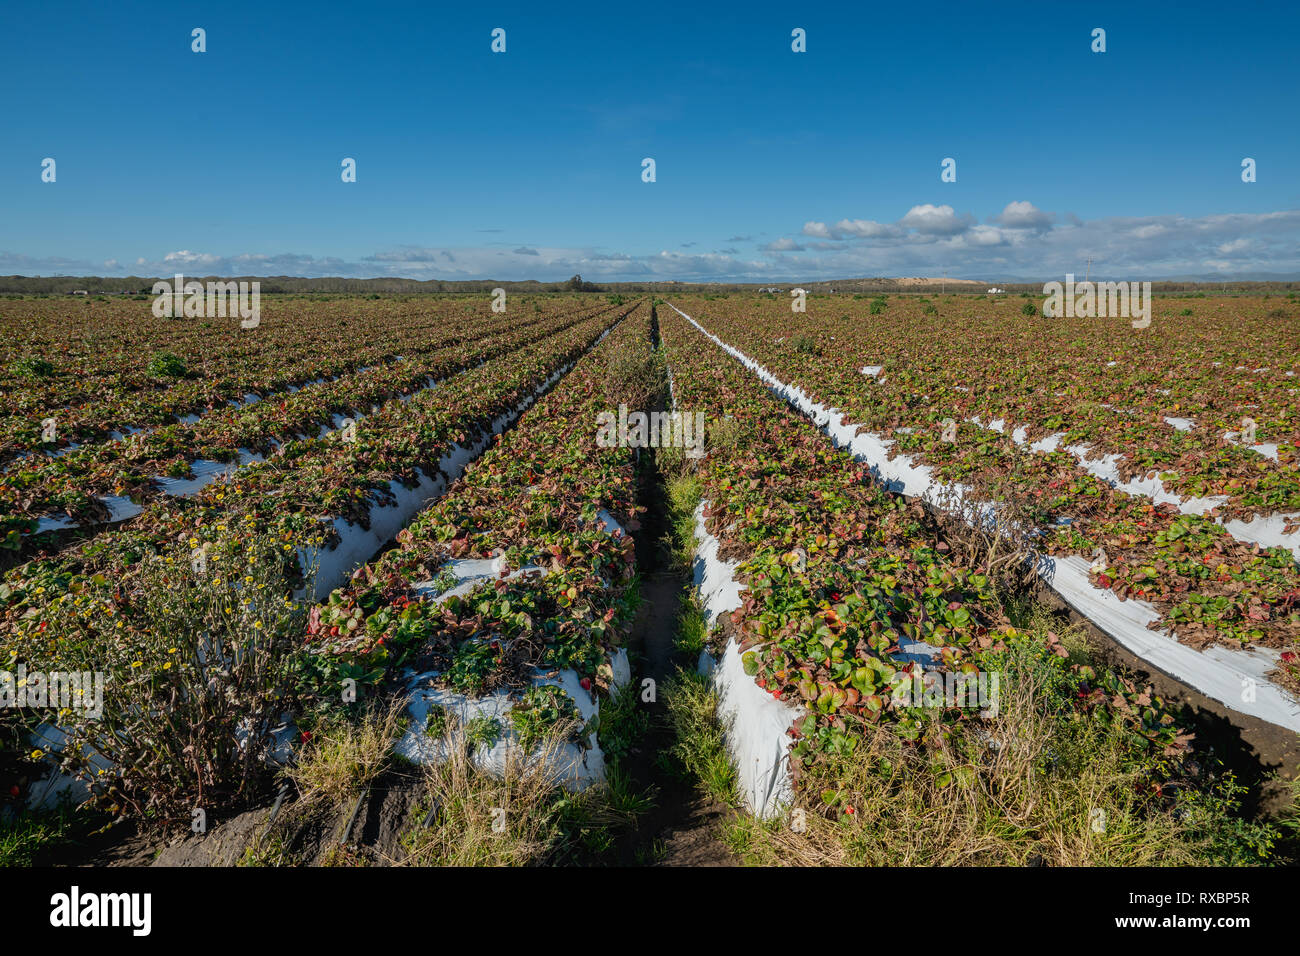 Strawberry Field Harvest Season In California Stock Photo Alamy,White Chocolate Dipped Oreos